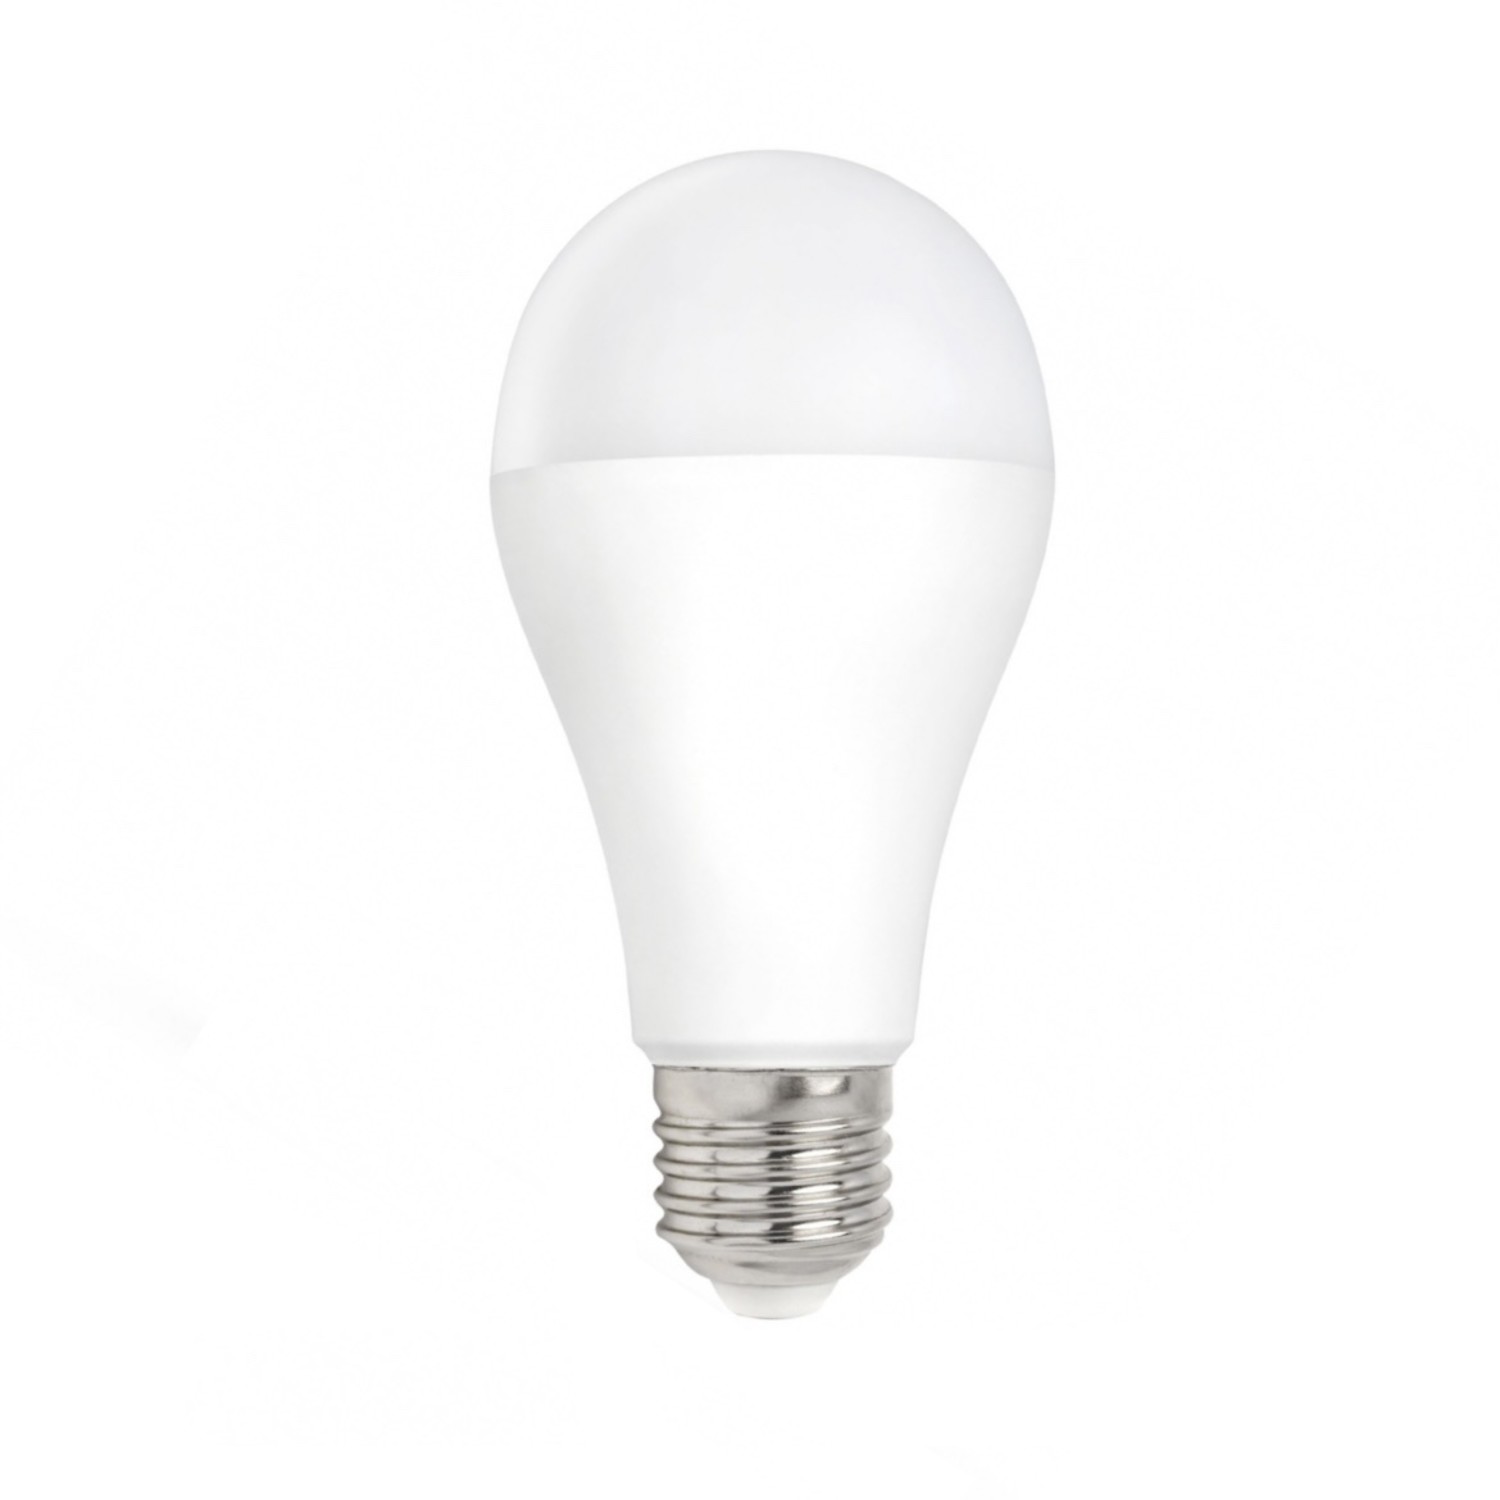 Postcode hoogtepunt opzettelijk LED lamp - E27 fitting - 10W vervangt 63W - 4000k helder wit licht -  Ledlichtdiscounter.nl